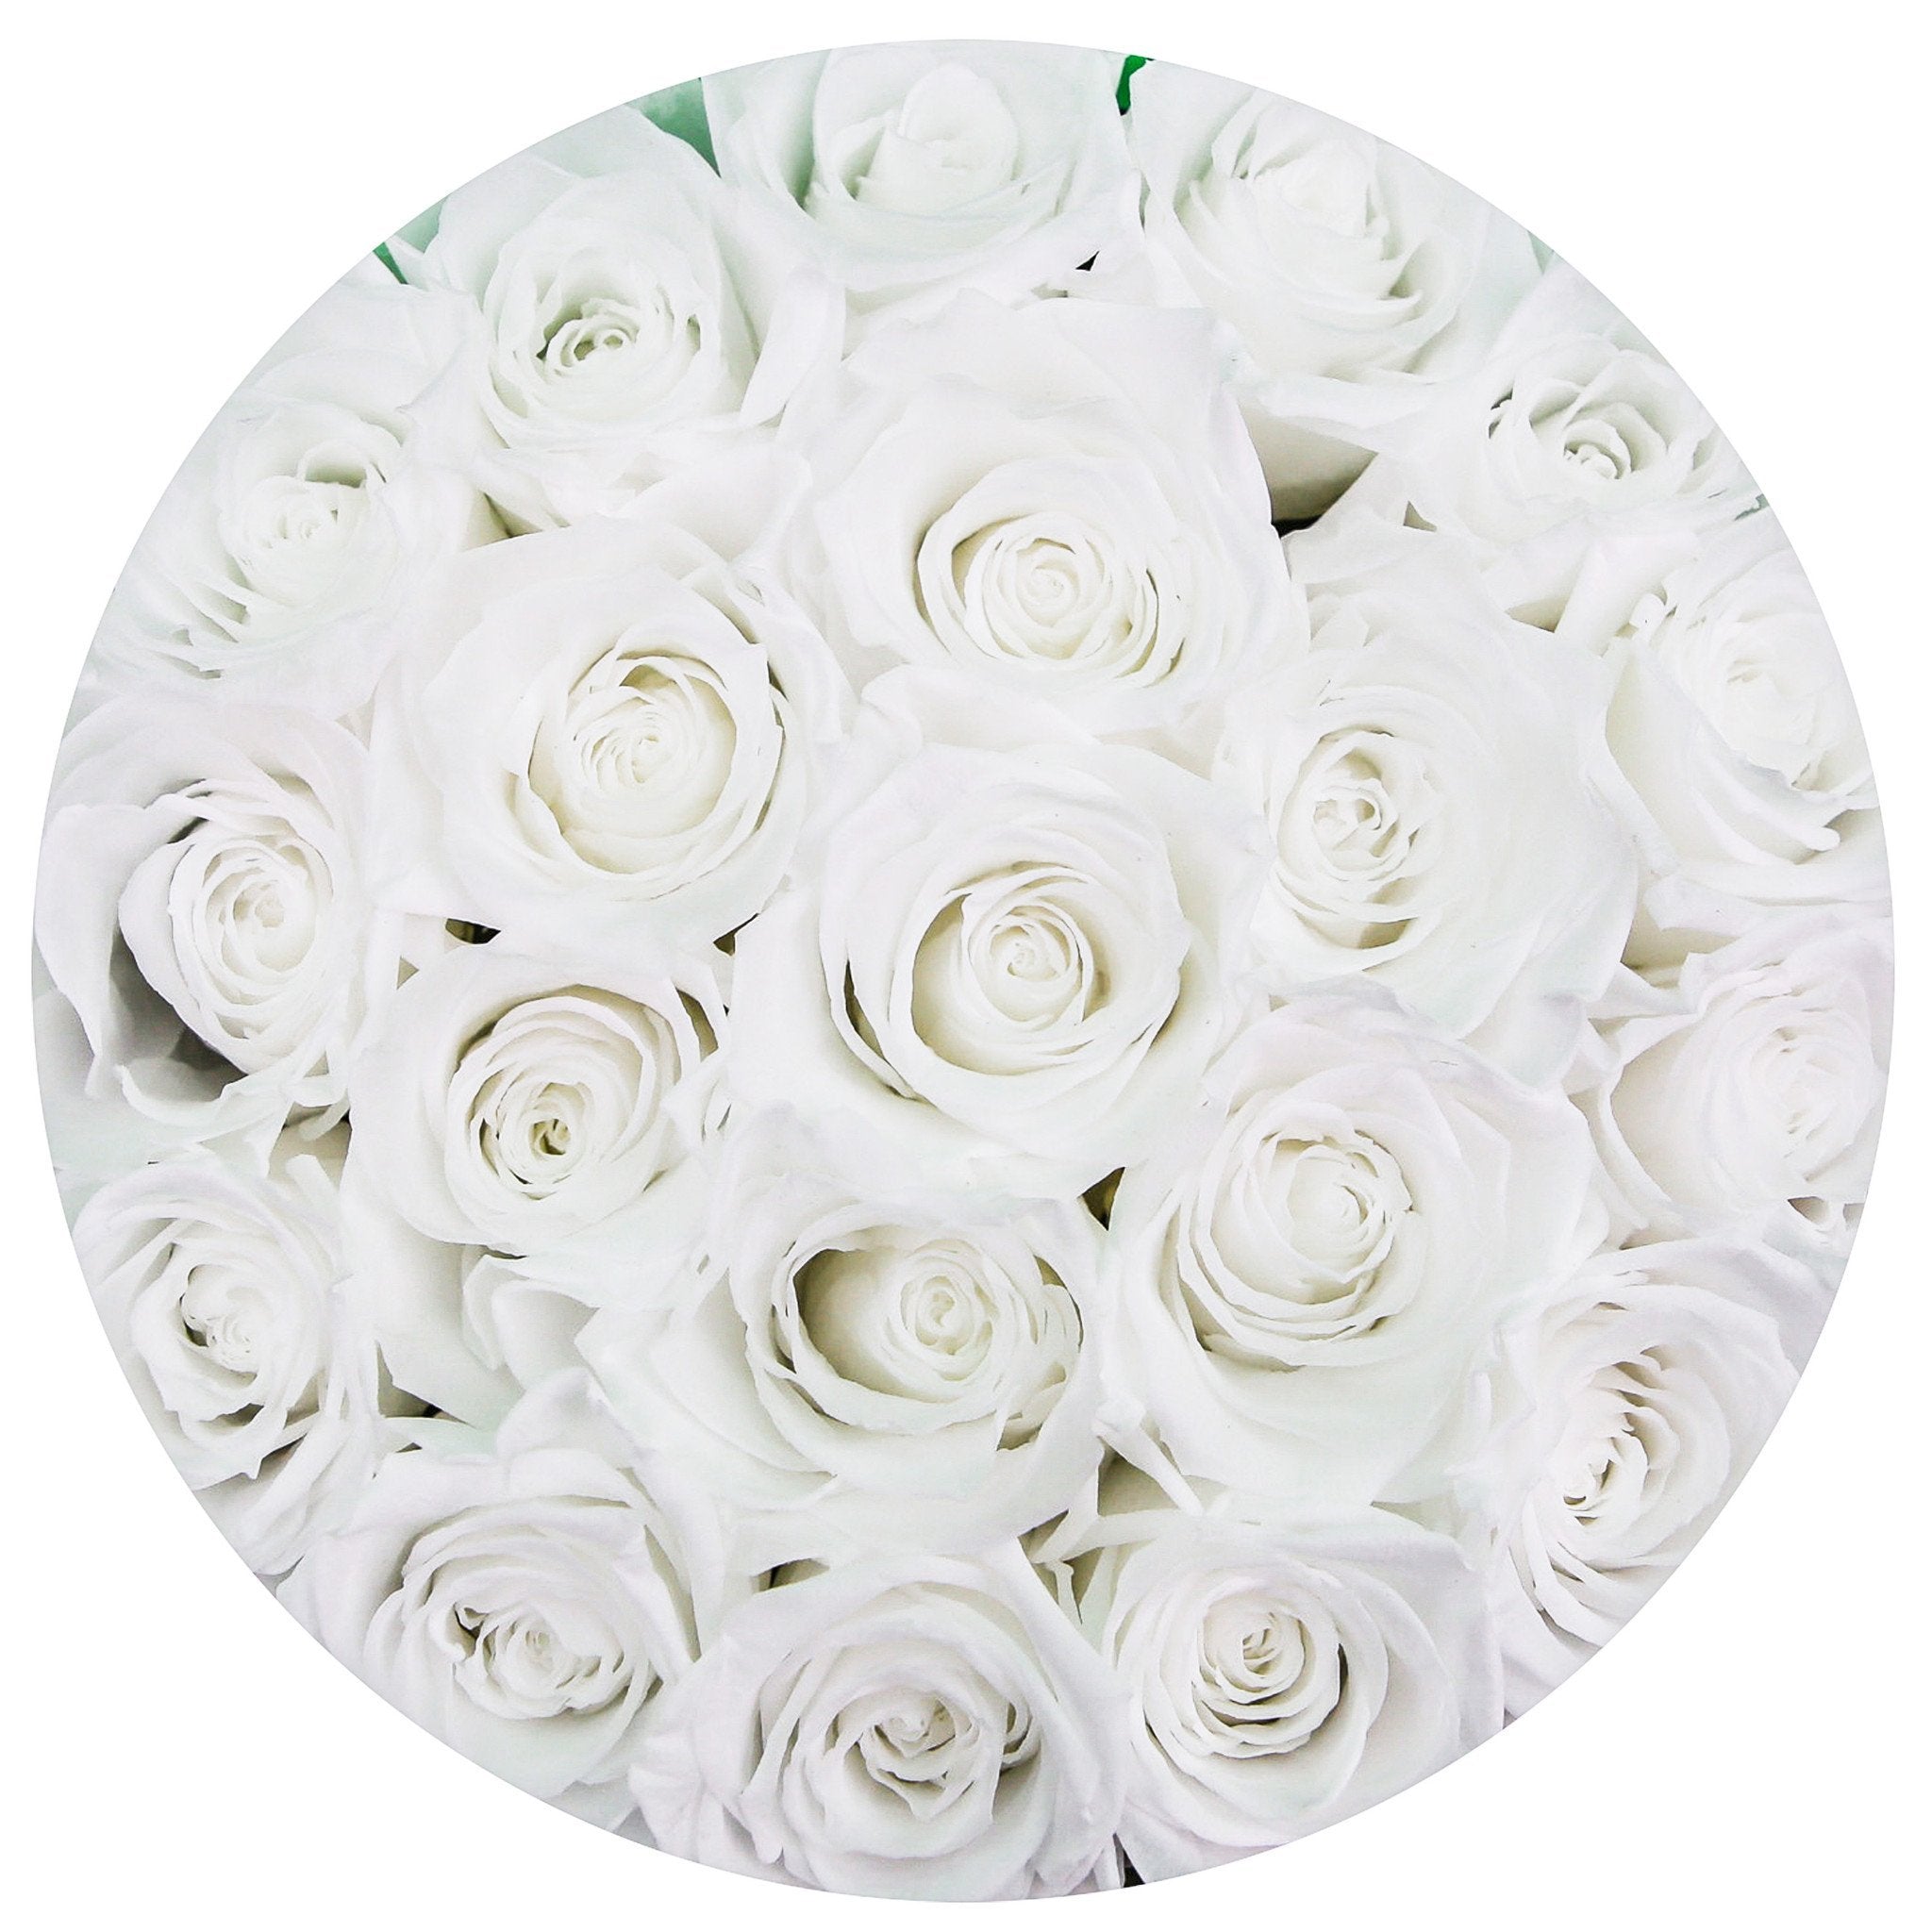 classic round box - white - white roses white eternity roses - the million roses